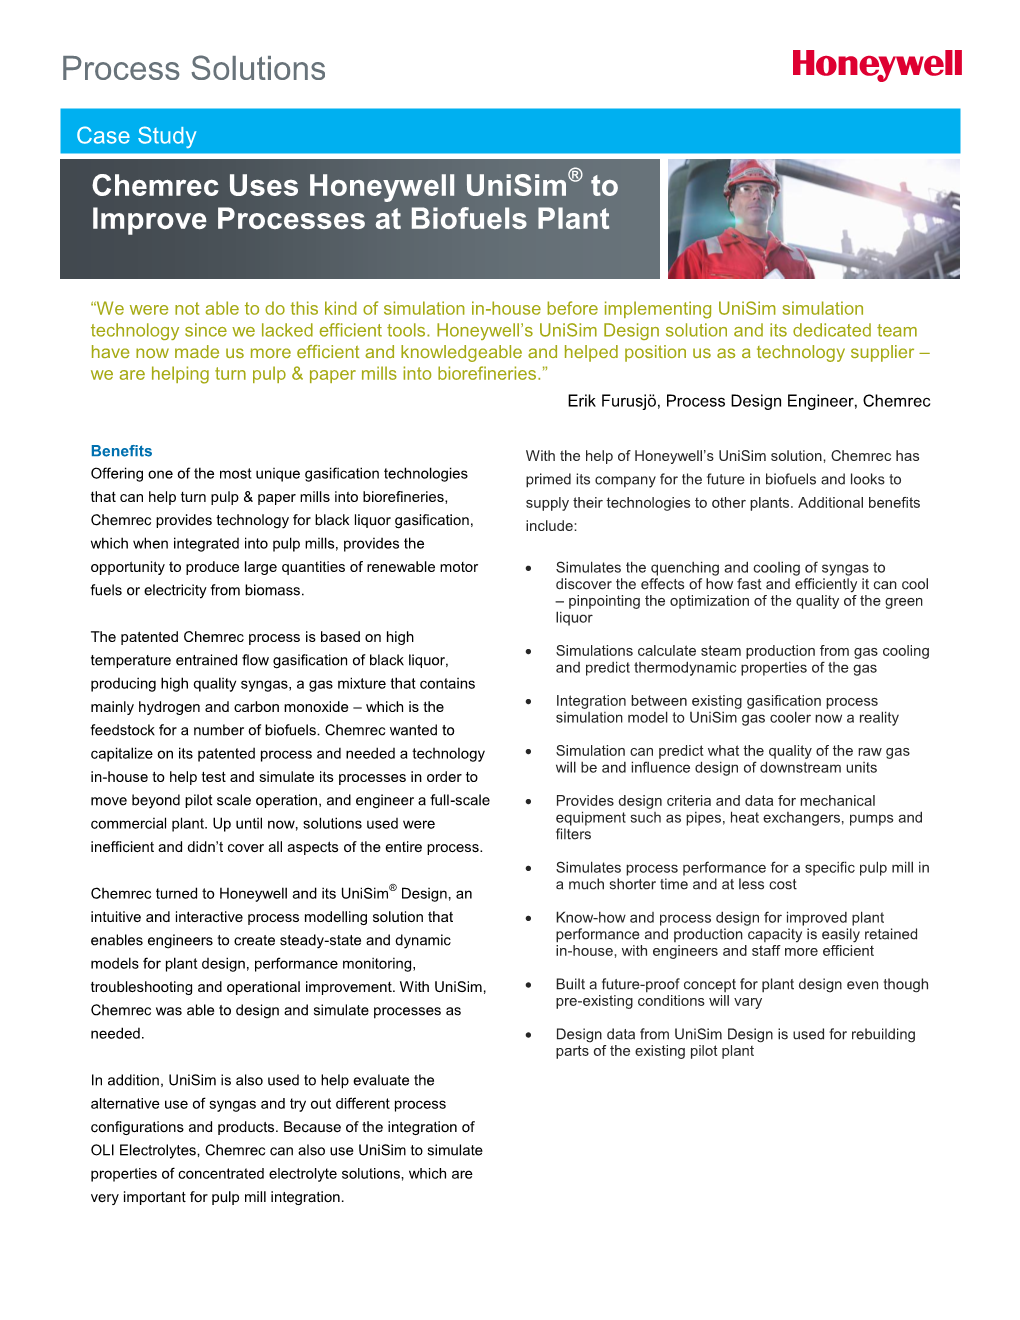 Chemrec Uses Honeywell Unisim® to Improve Processes at Biofuels Plant